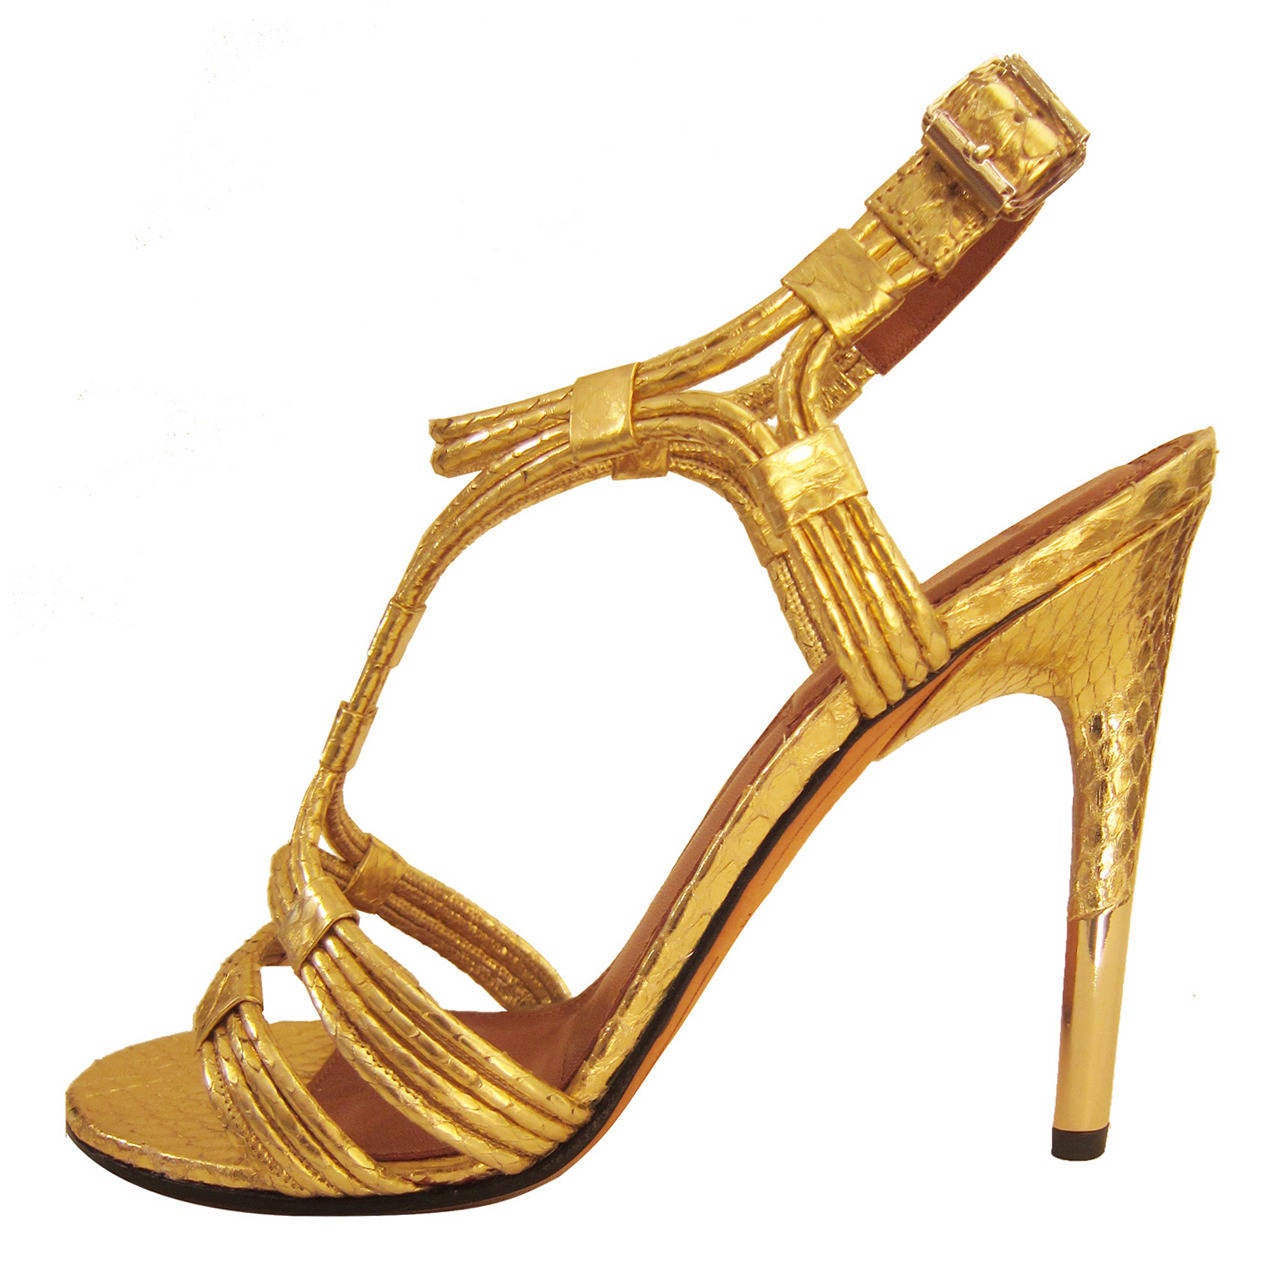 GIVENCHY Metallic Gold Python Sandals